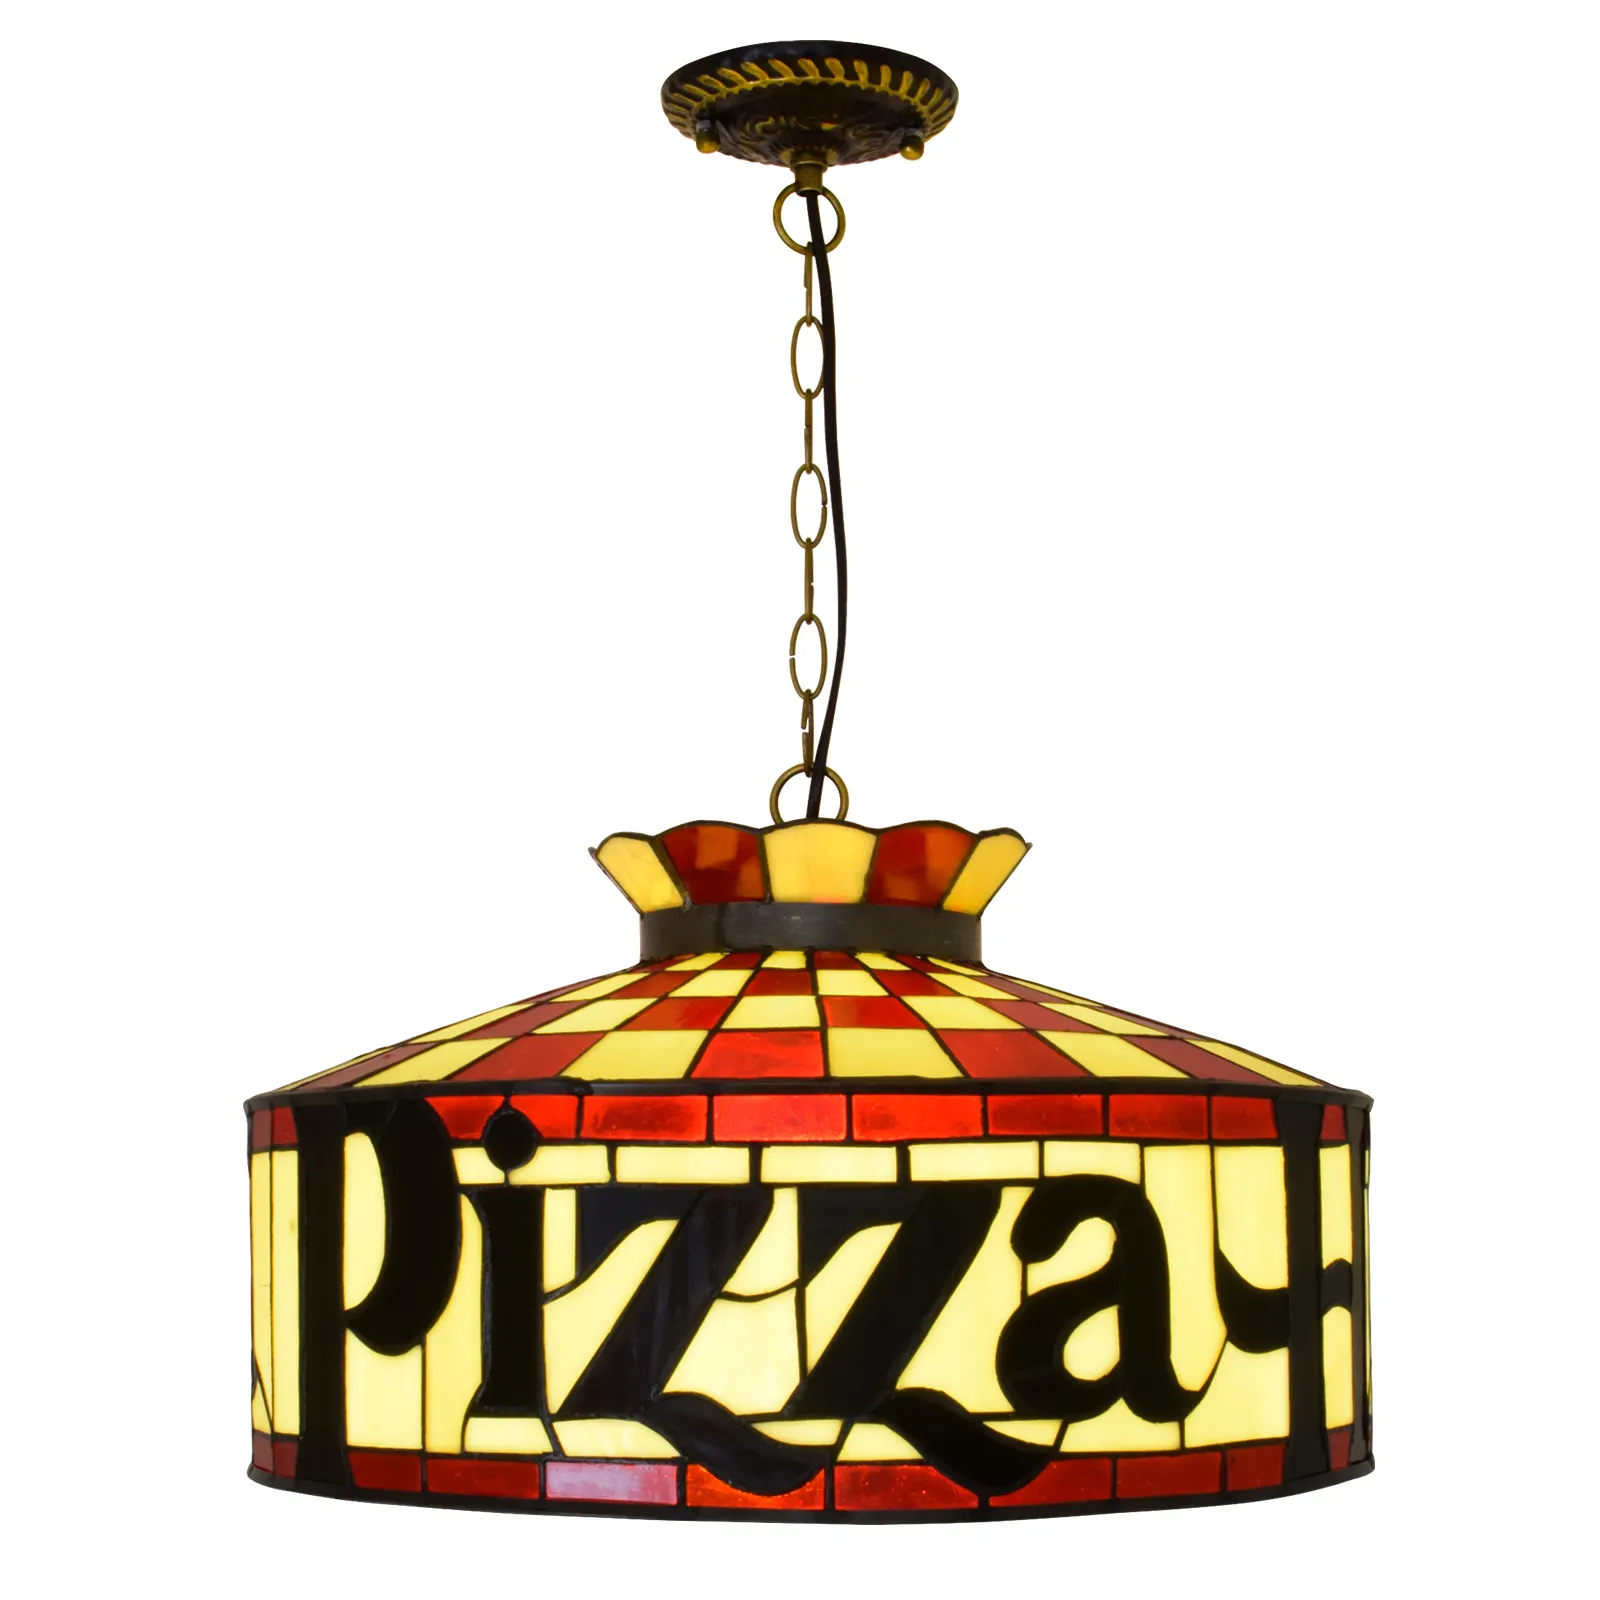 New Big chandelier 2022 Vintage PIZZA chandelier Tiffany glass globe swag lamp Retro hanging lights for restaurant